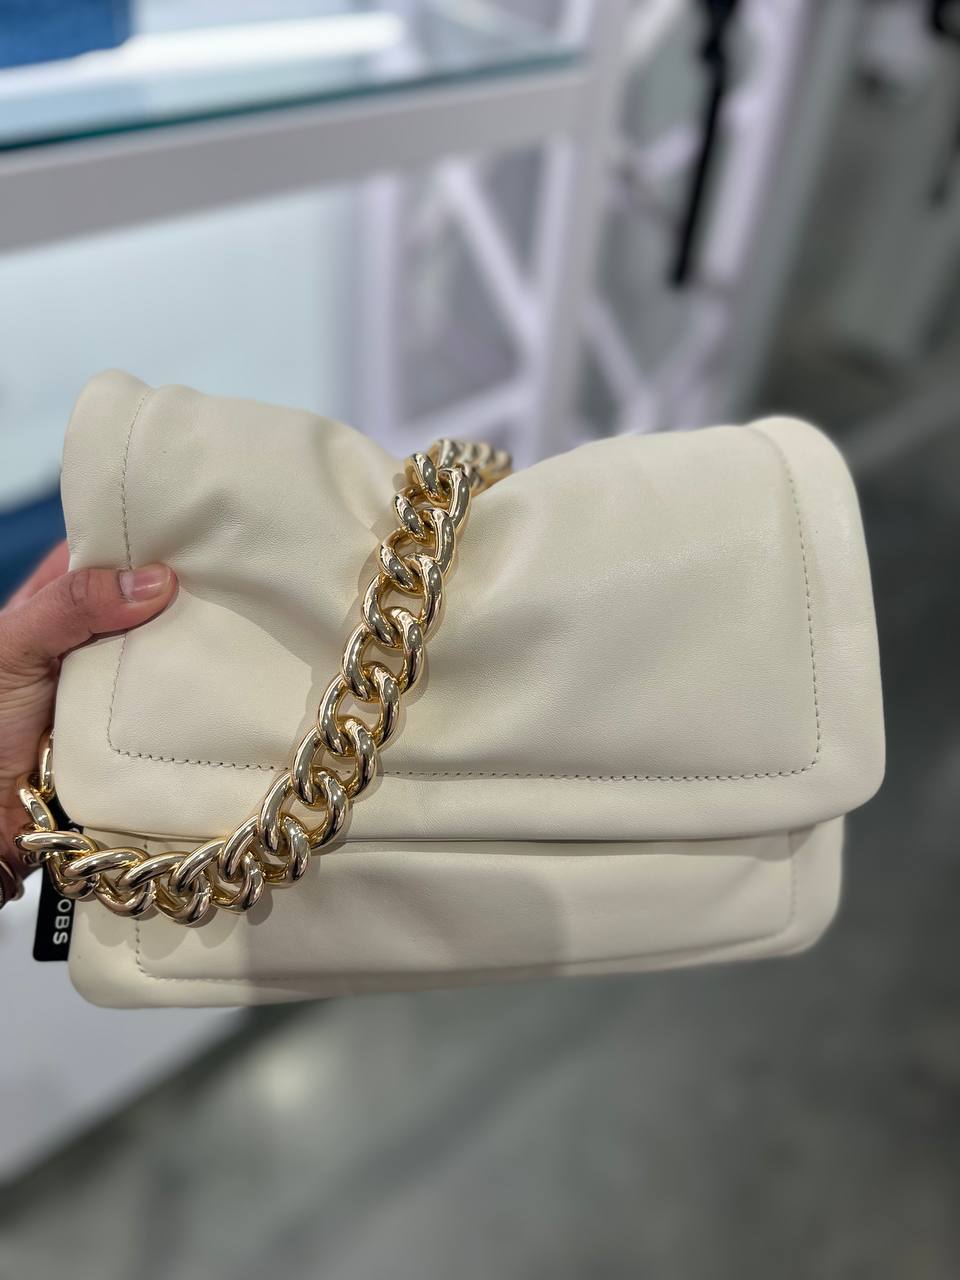 Marc Jacobs Pillow Bag Reveal